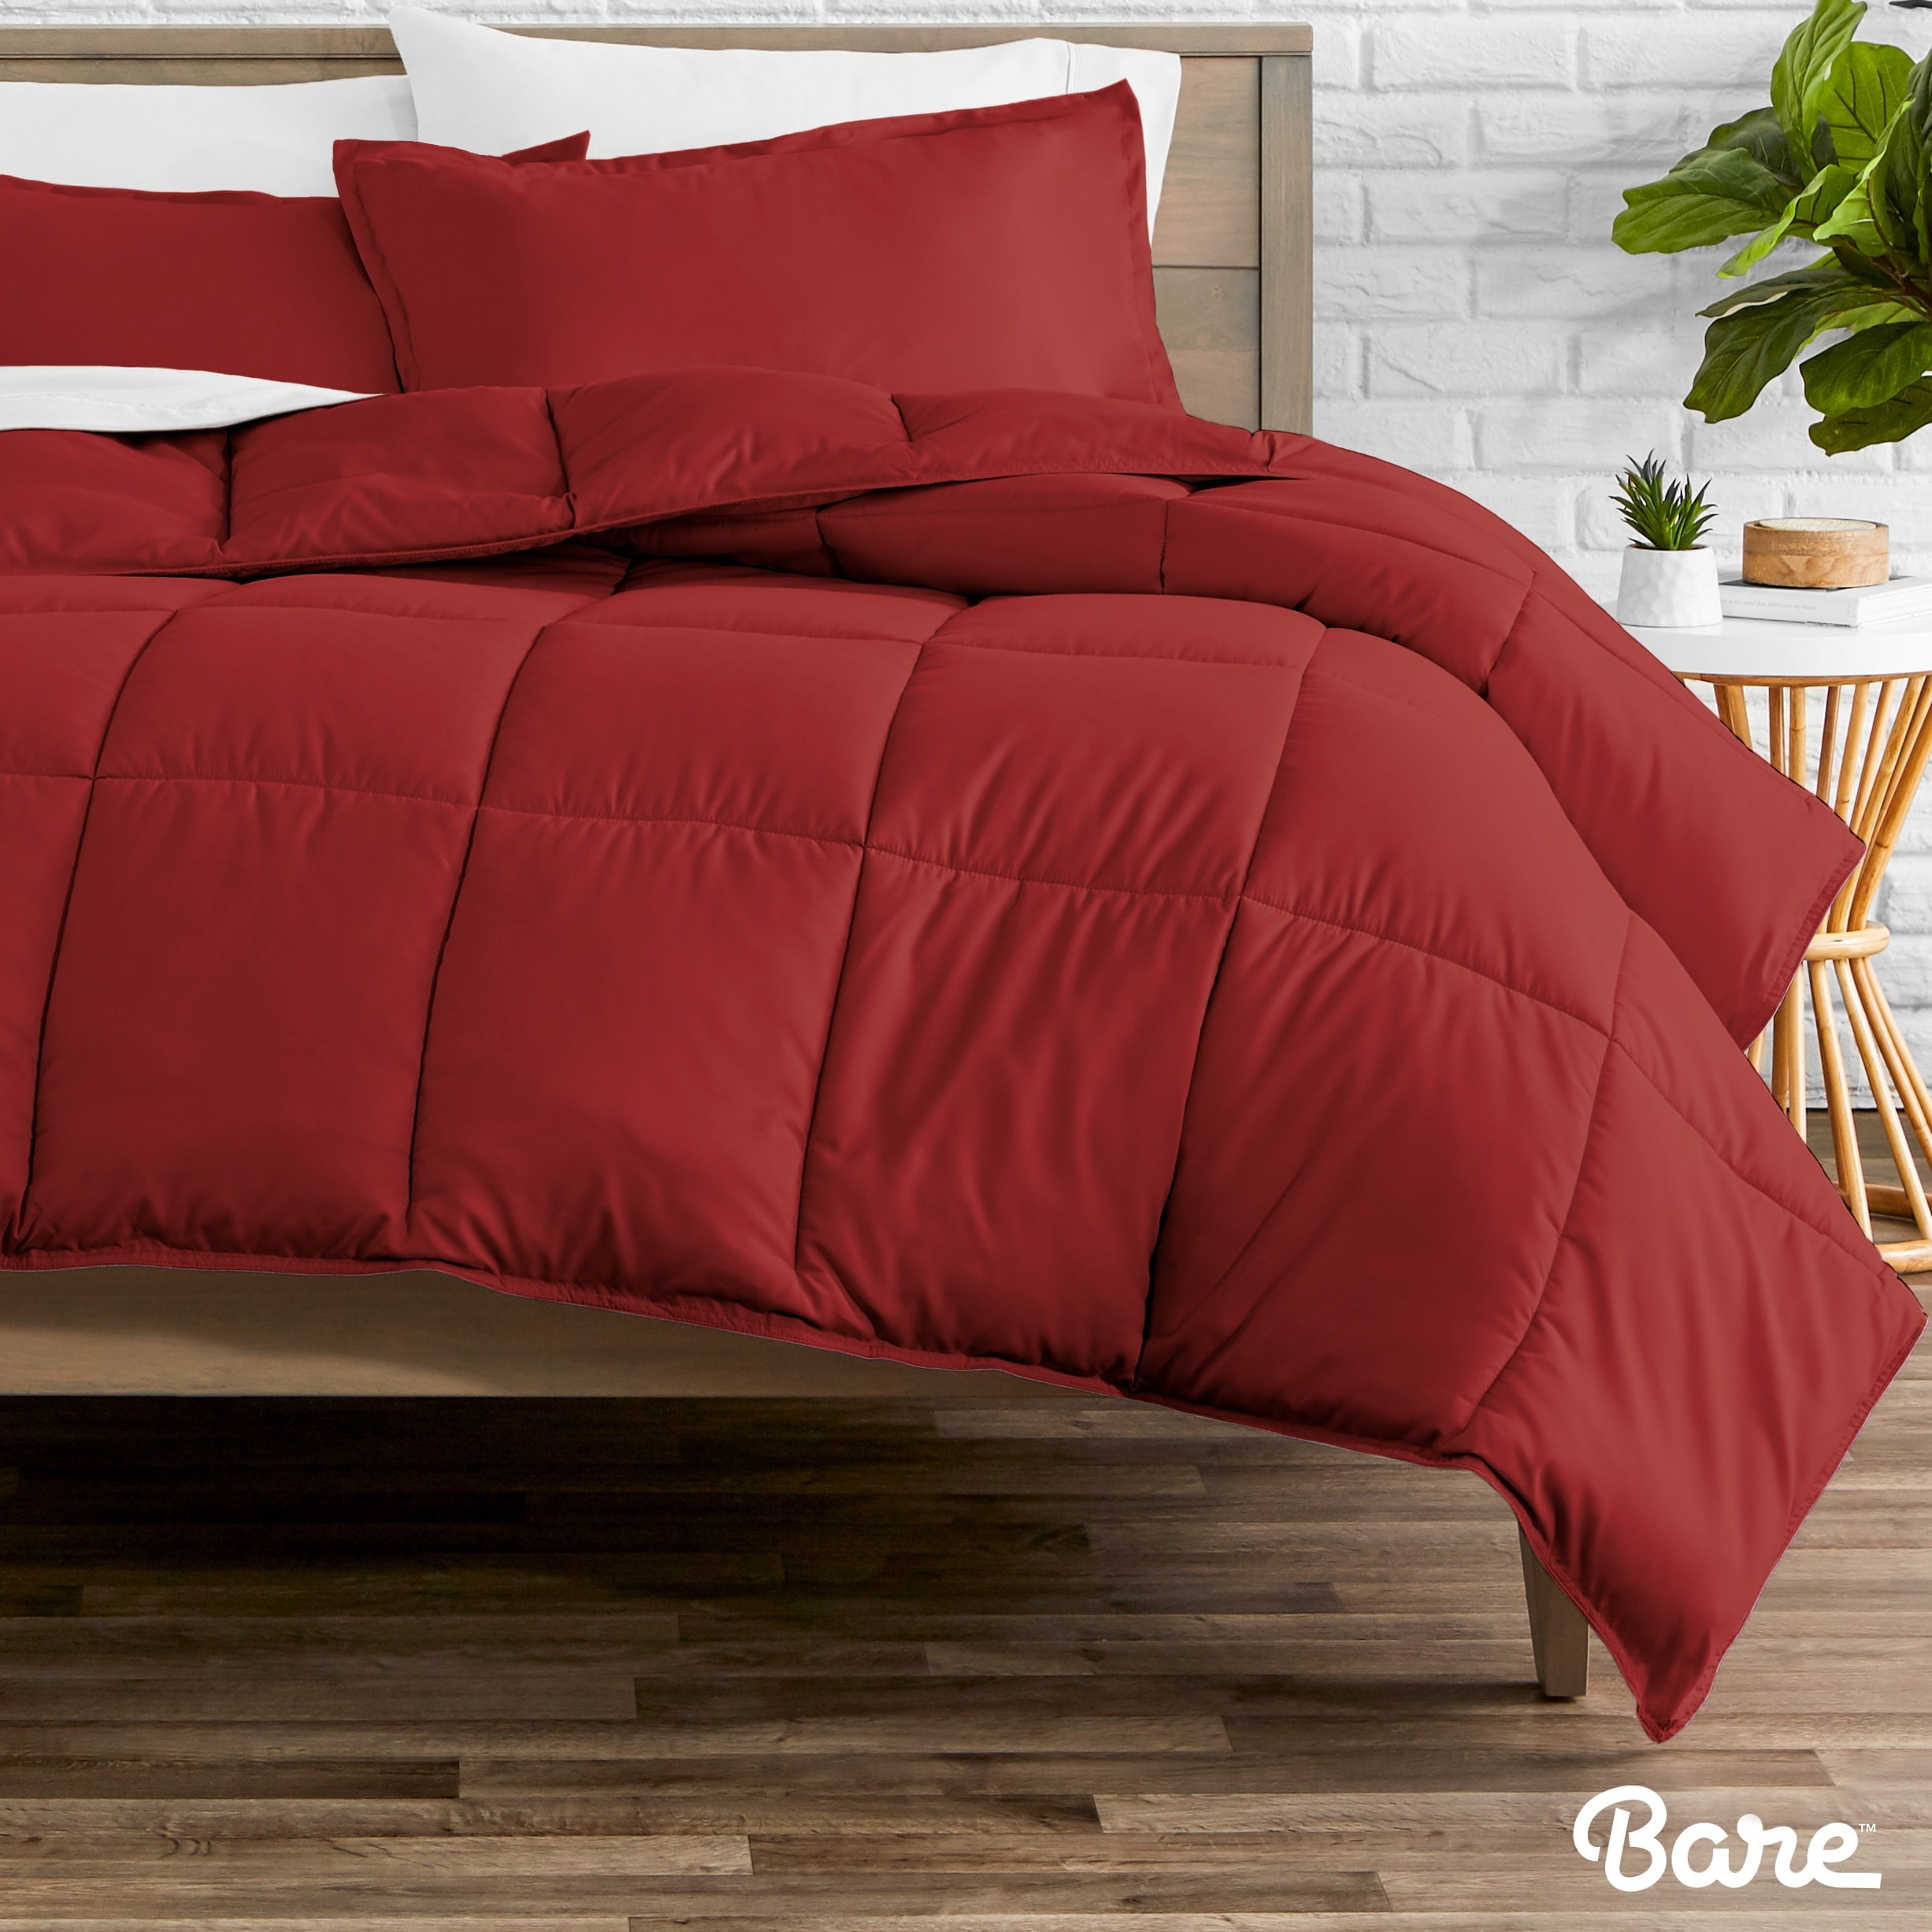 Bare Home Hypoallergenic All Season Down Alternative Comforter Set Red